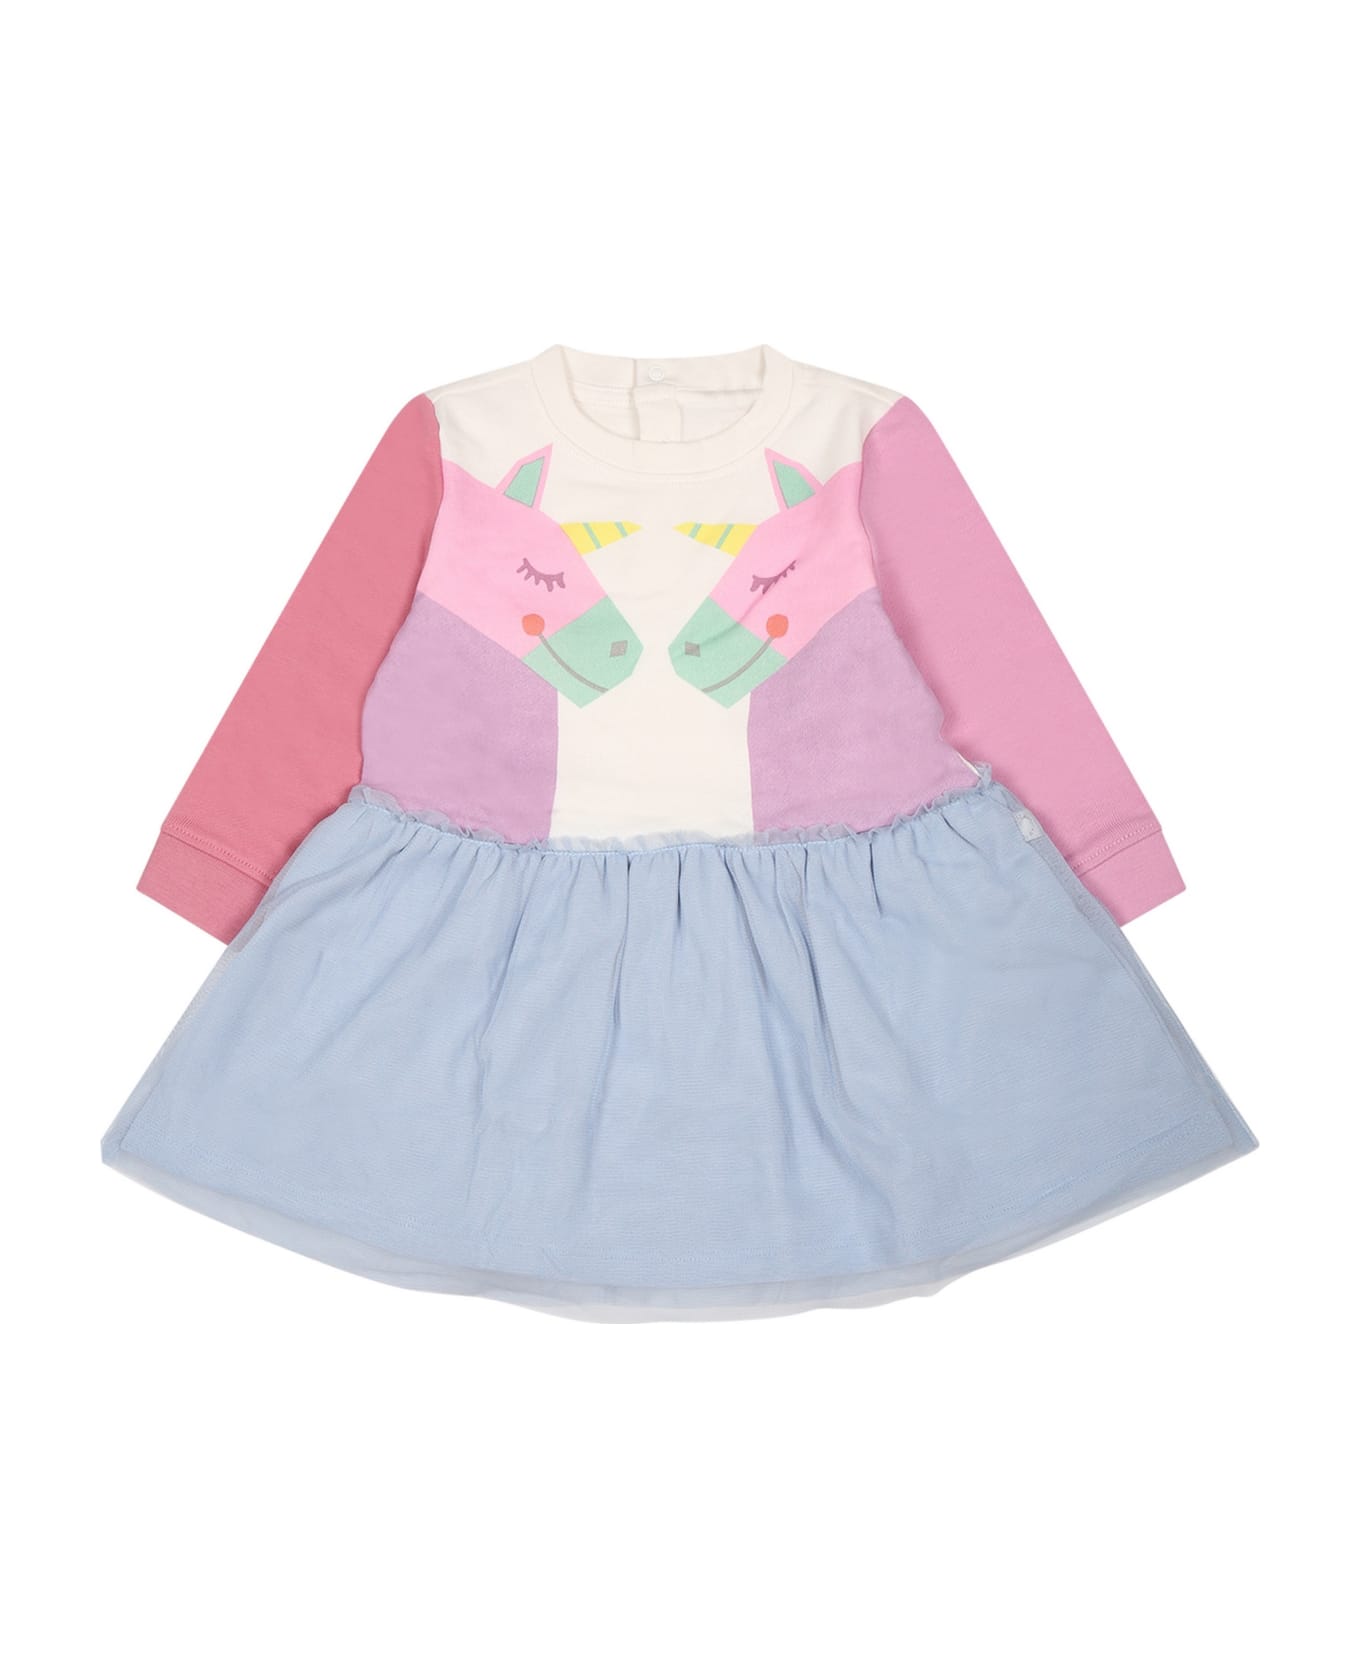 Stella McCartney Kids Multicolor Dress For Baby Girl With Unicorns - Multicolor ウェア